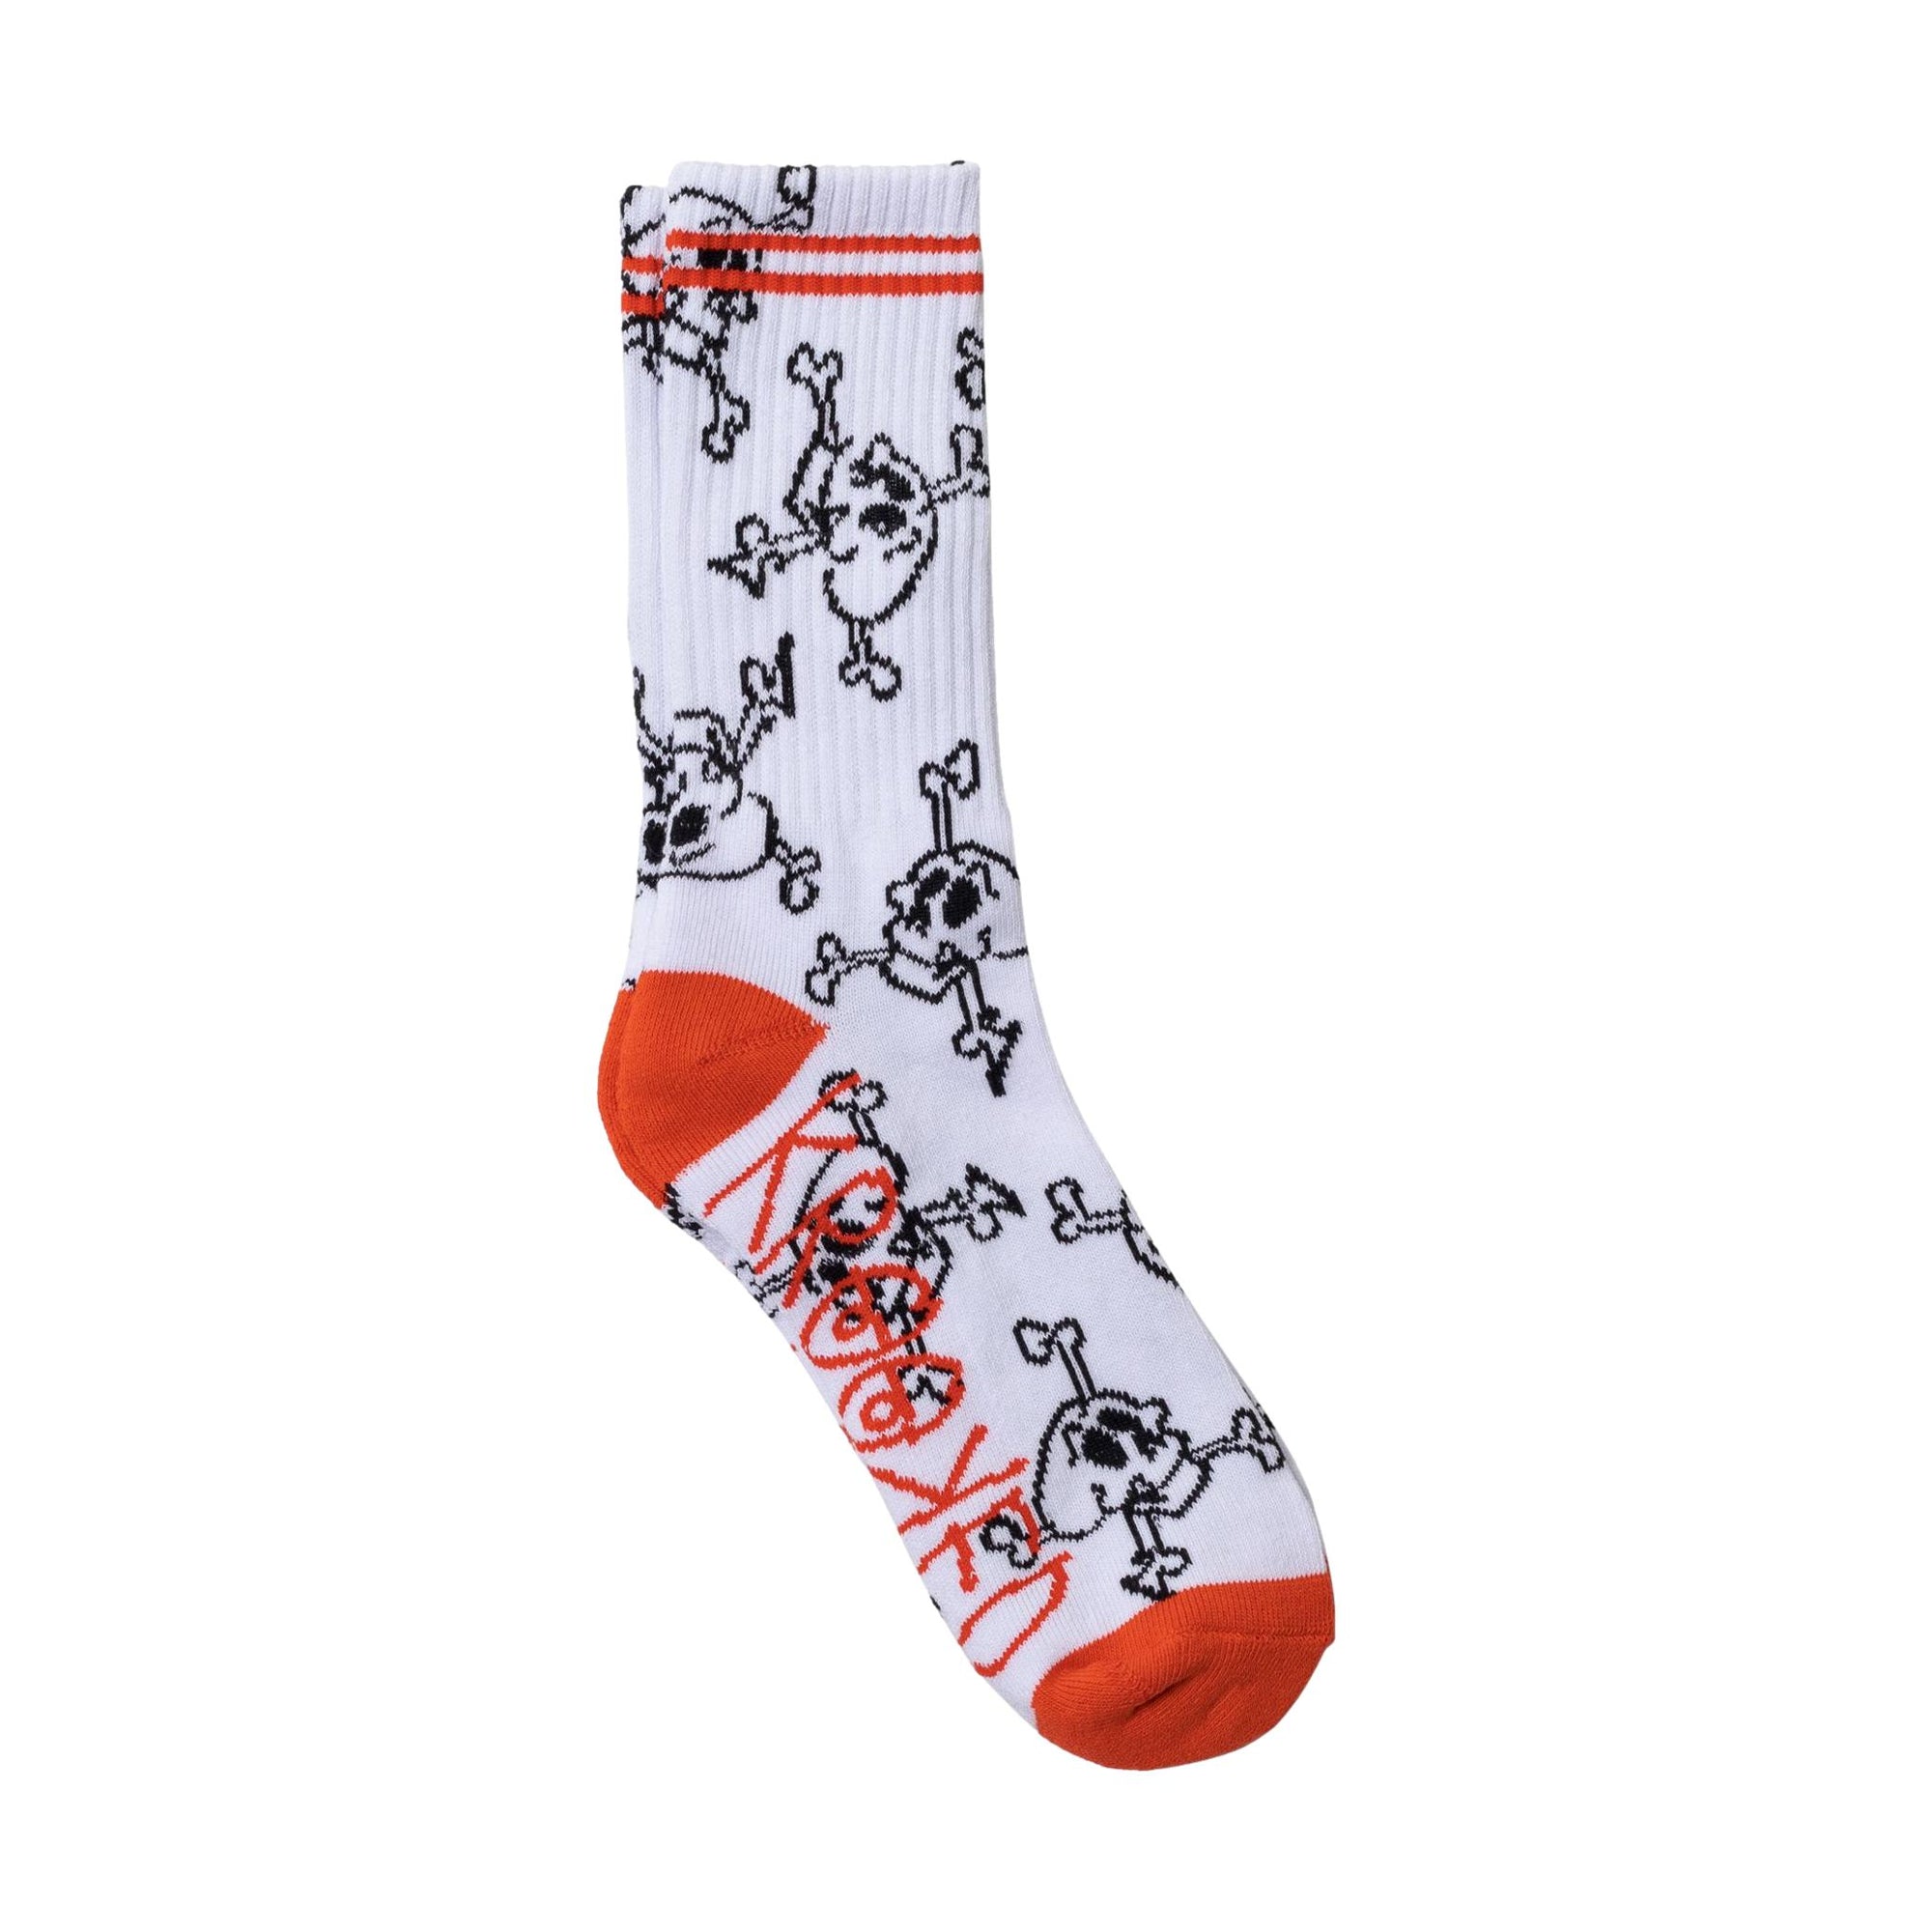 Krooked Style Socks White/Black/Red - Venue Skateboards